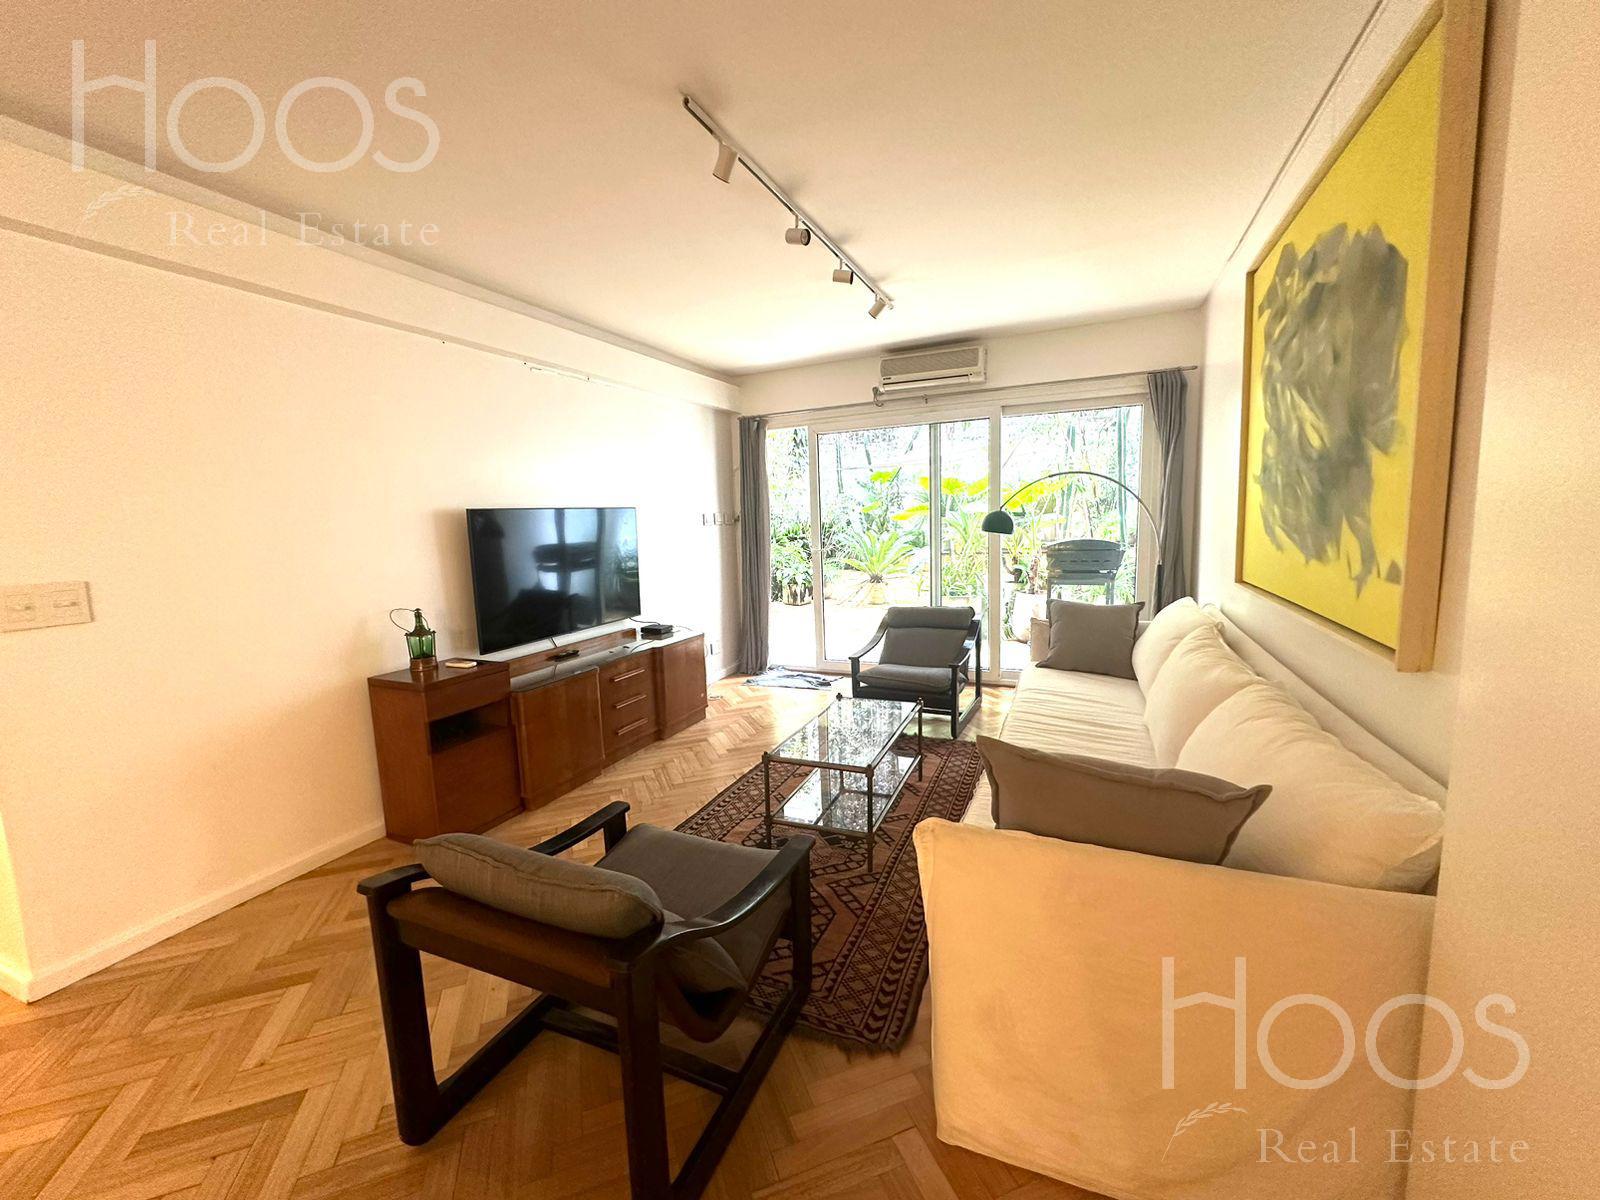 #5053847 | Rental | Apartment | Recoleta (Hoos Real Estate)